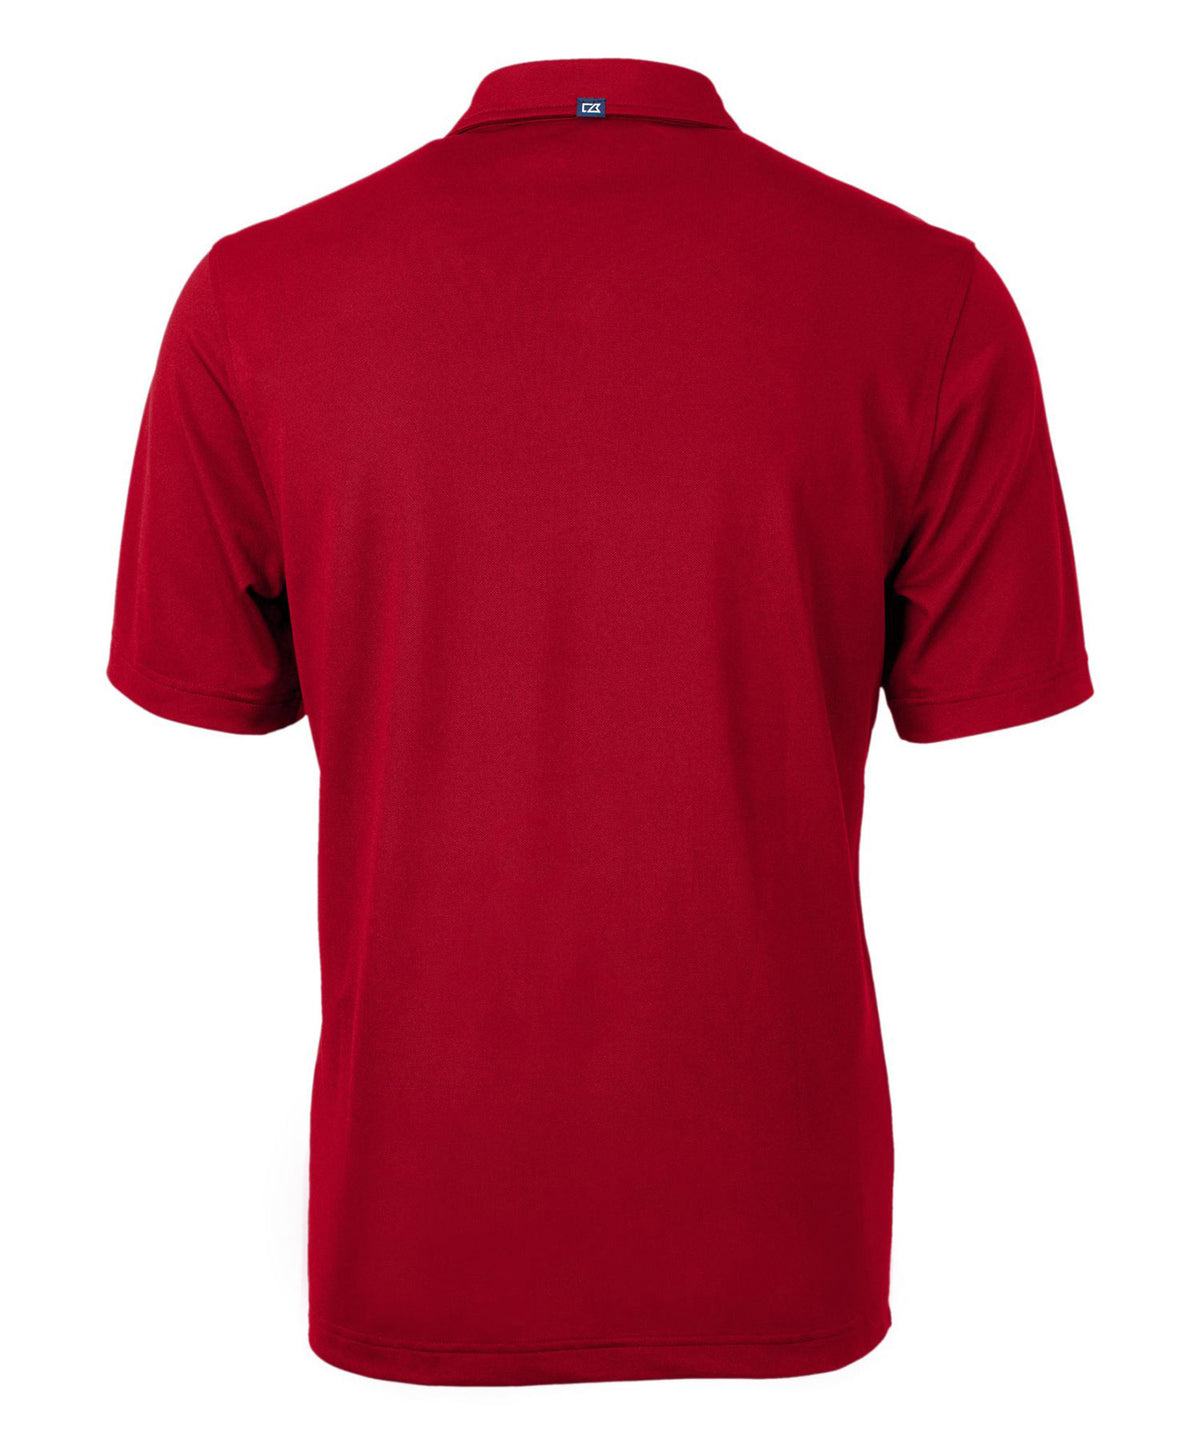 Cutter & Buck University of Arizona Wildcats Short Sleeve Polo Knit Shirt, Men's Big & Tall